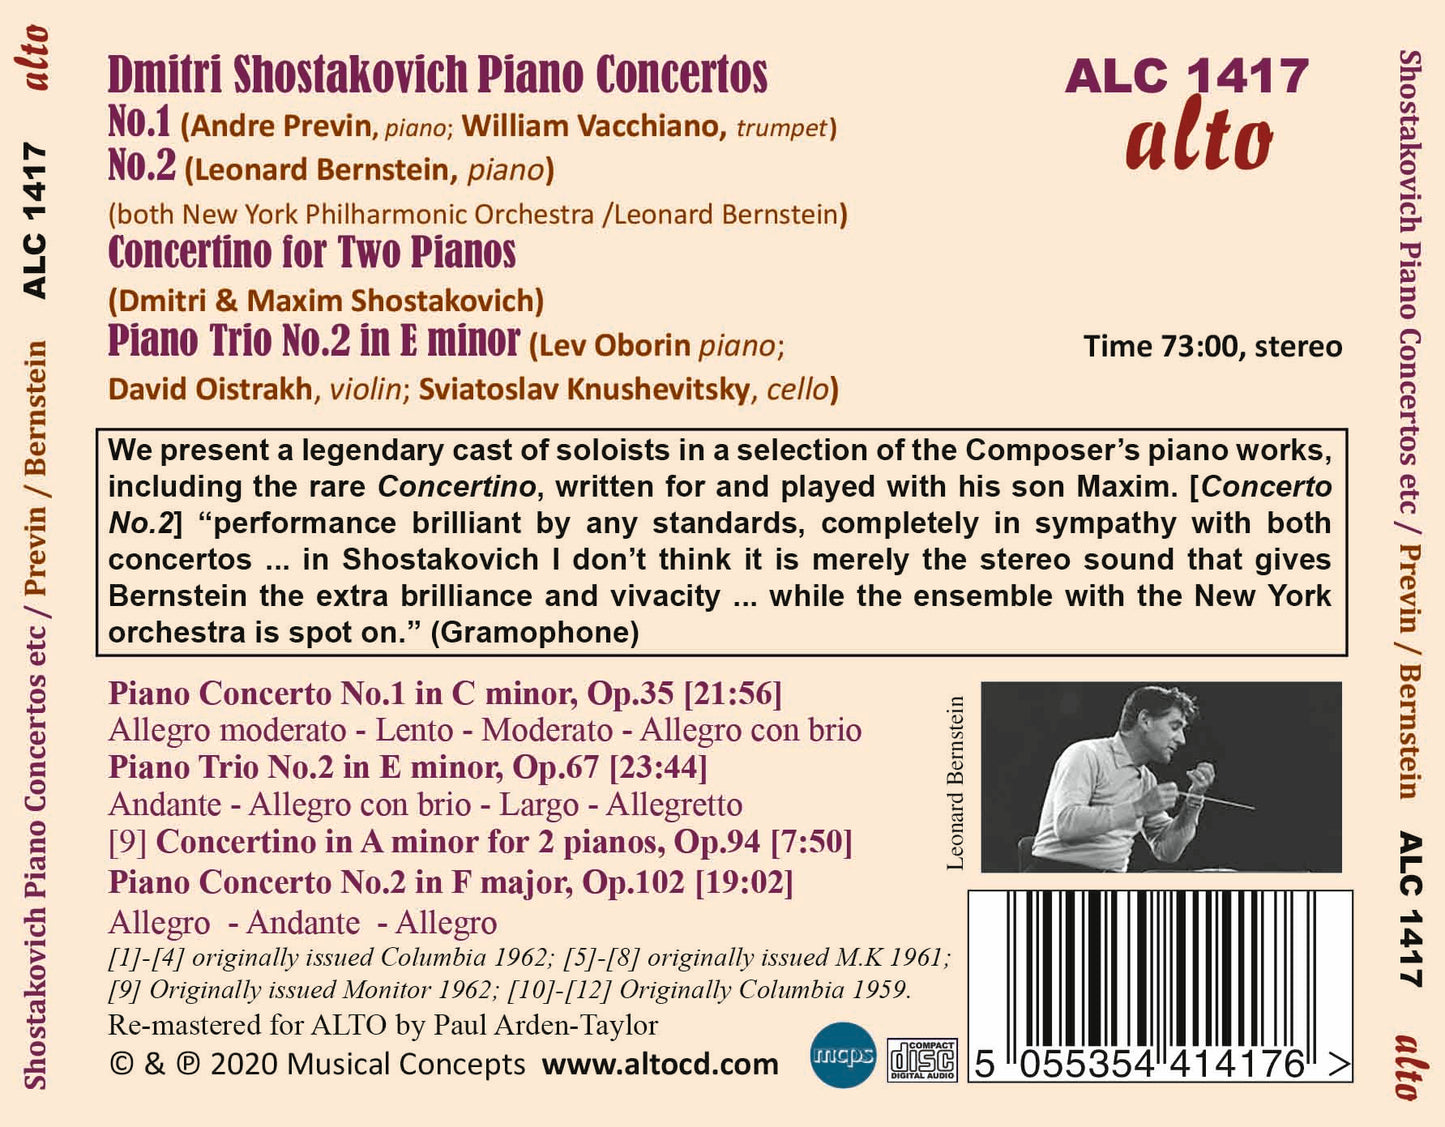 Shostakovich Piano Concertos 1 & 2; Concertino for Two Pianos; Piano Trio no. 2 - Previn, Bernstein, Oistrakh Trio, New York Philharmonic